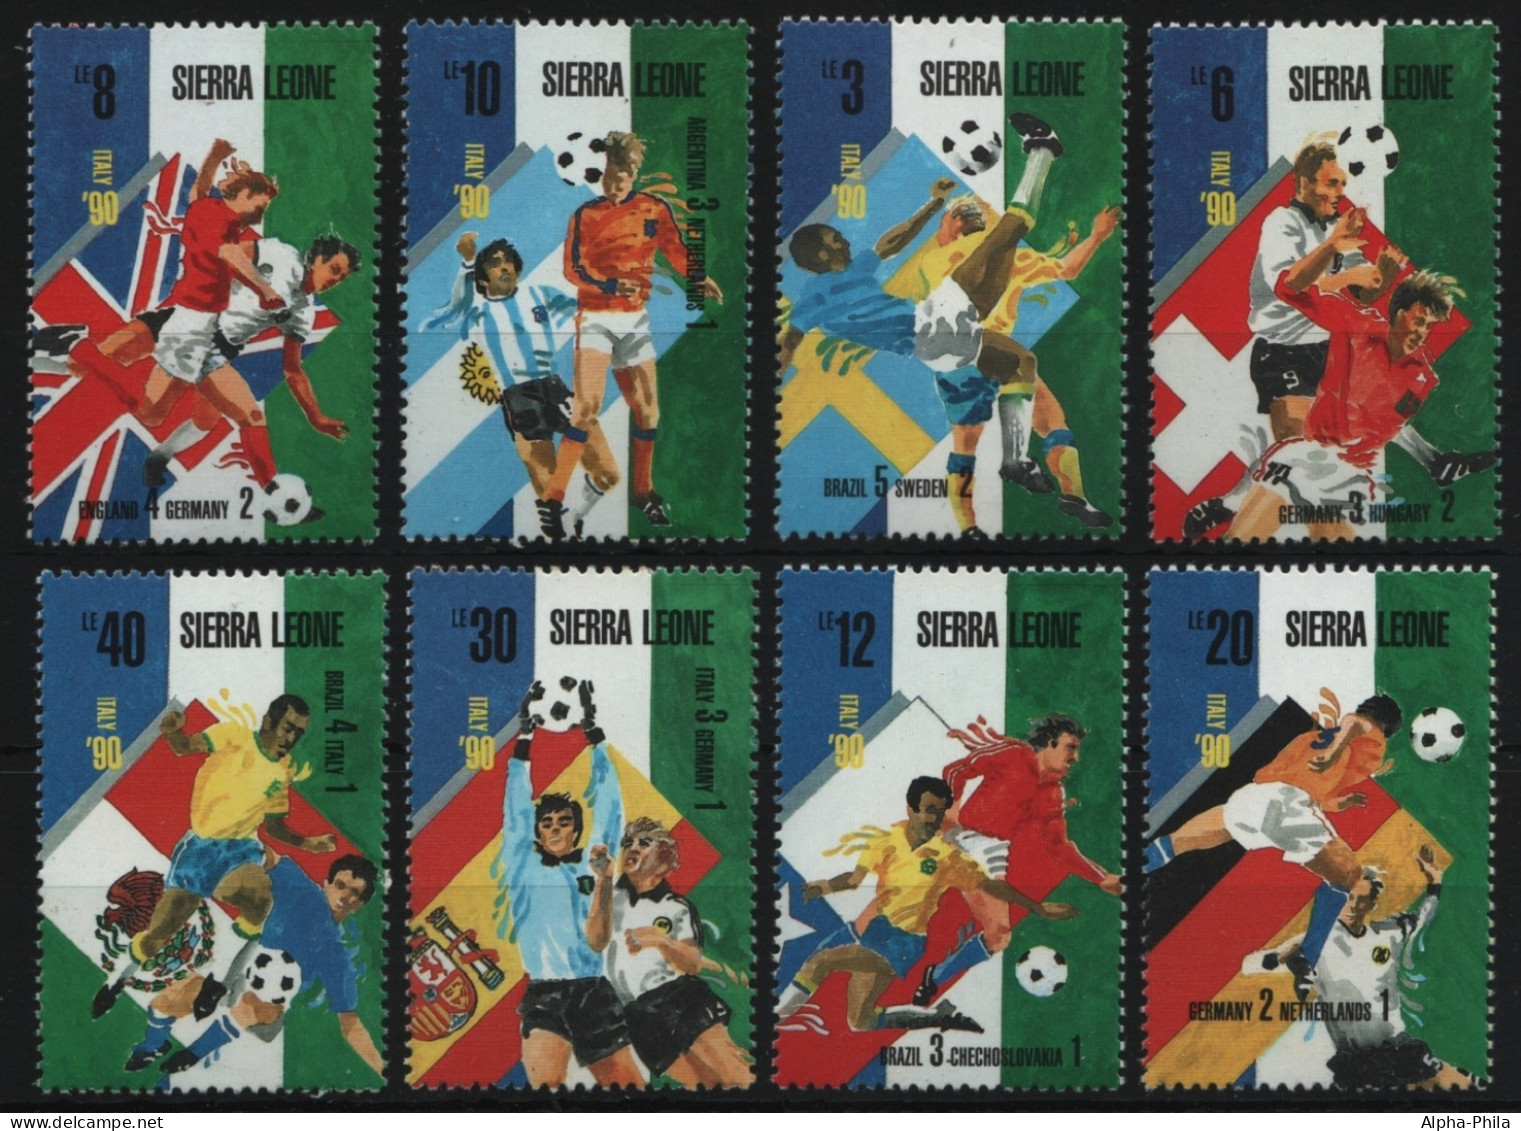 Sierra Leone 1989 - Mi-Nr. 1154-1161 ** - MNH - Fußball / Soccer - Sierra Leone (1961-...)